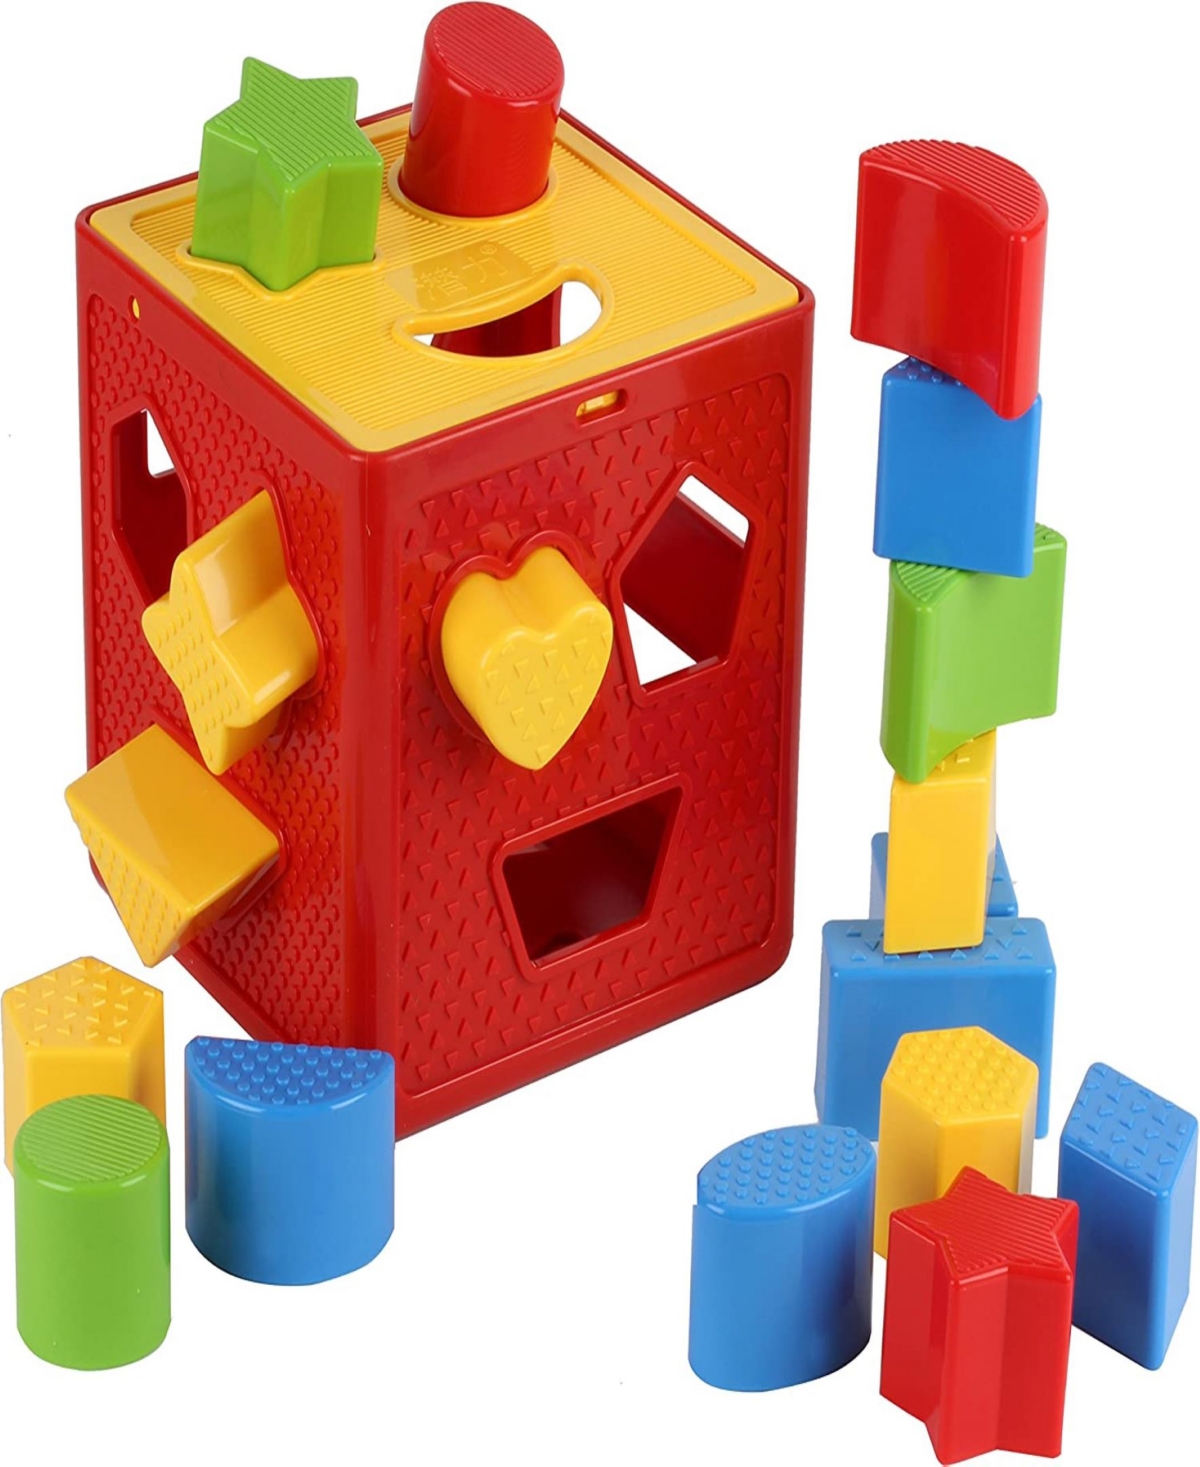 Play22 Baby Blocks Shape Sorter Toy Set, 18 Piece In Multicolor